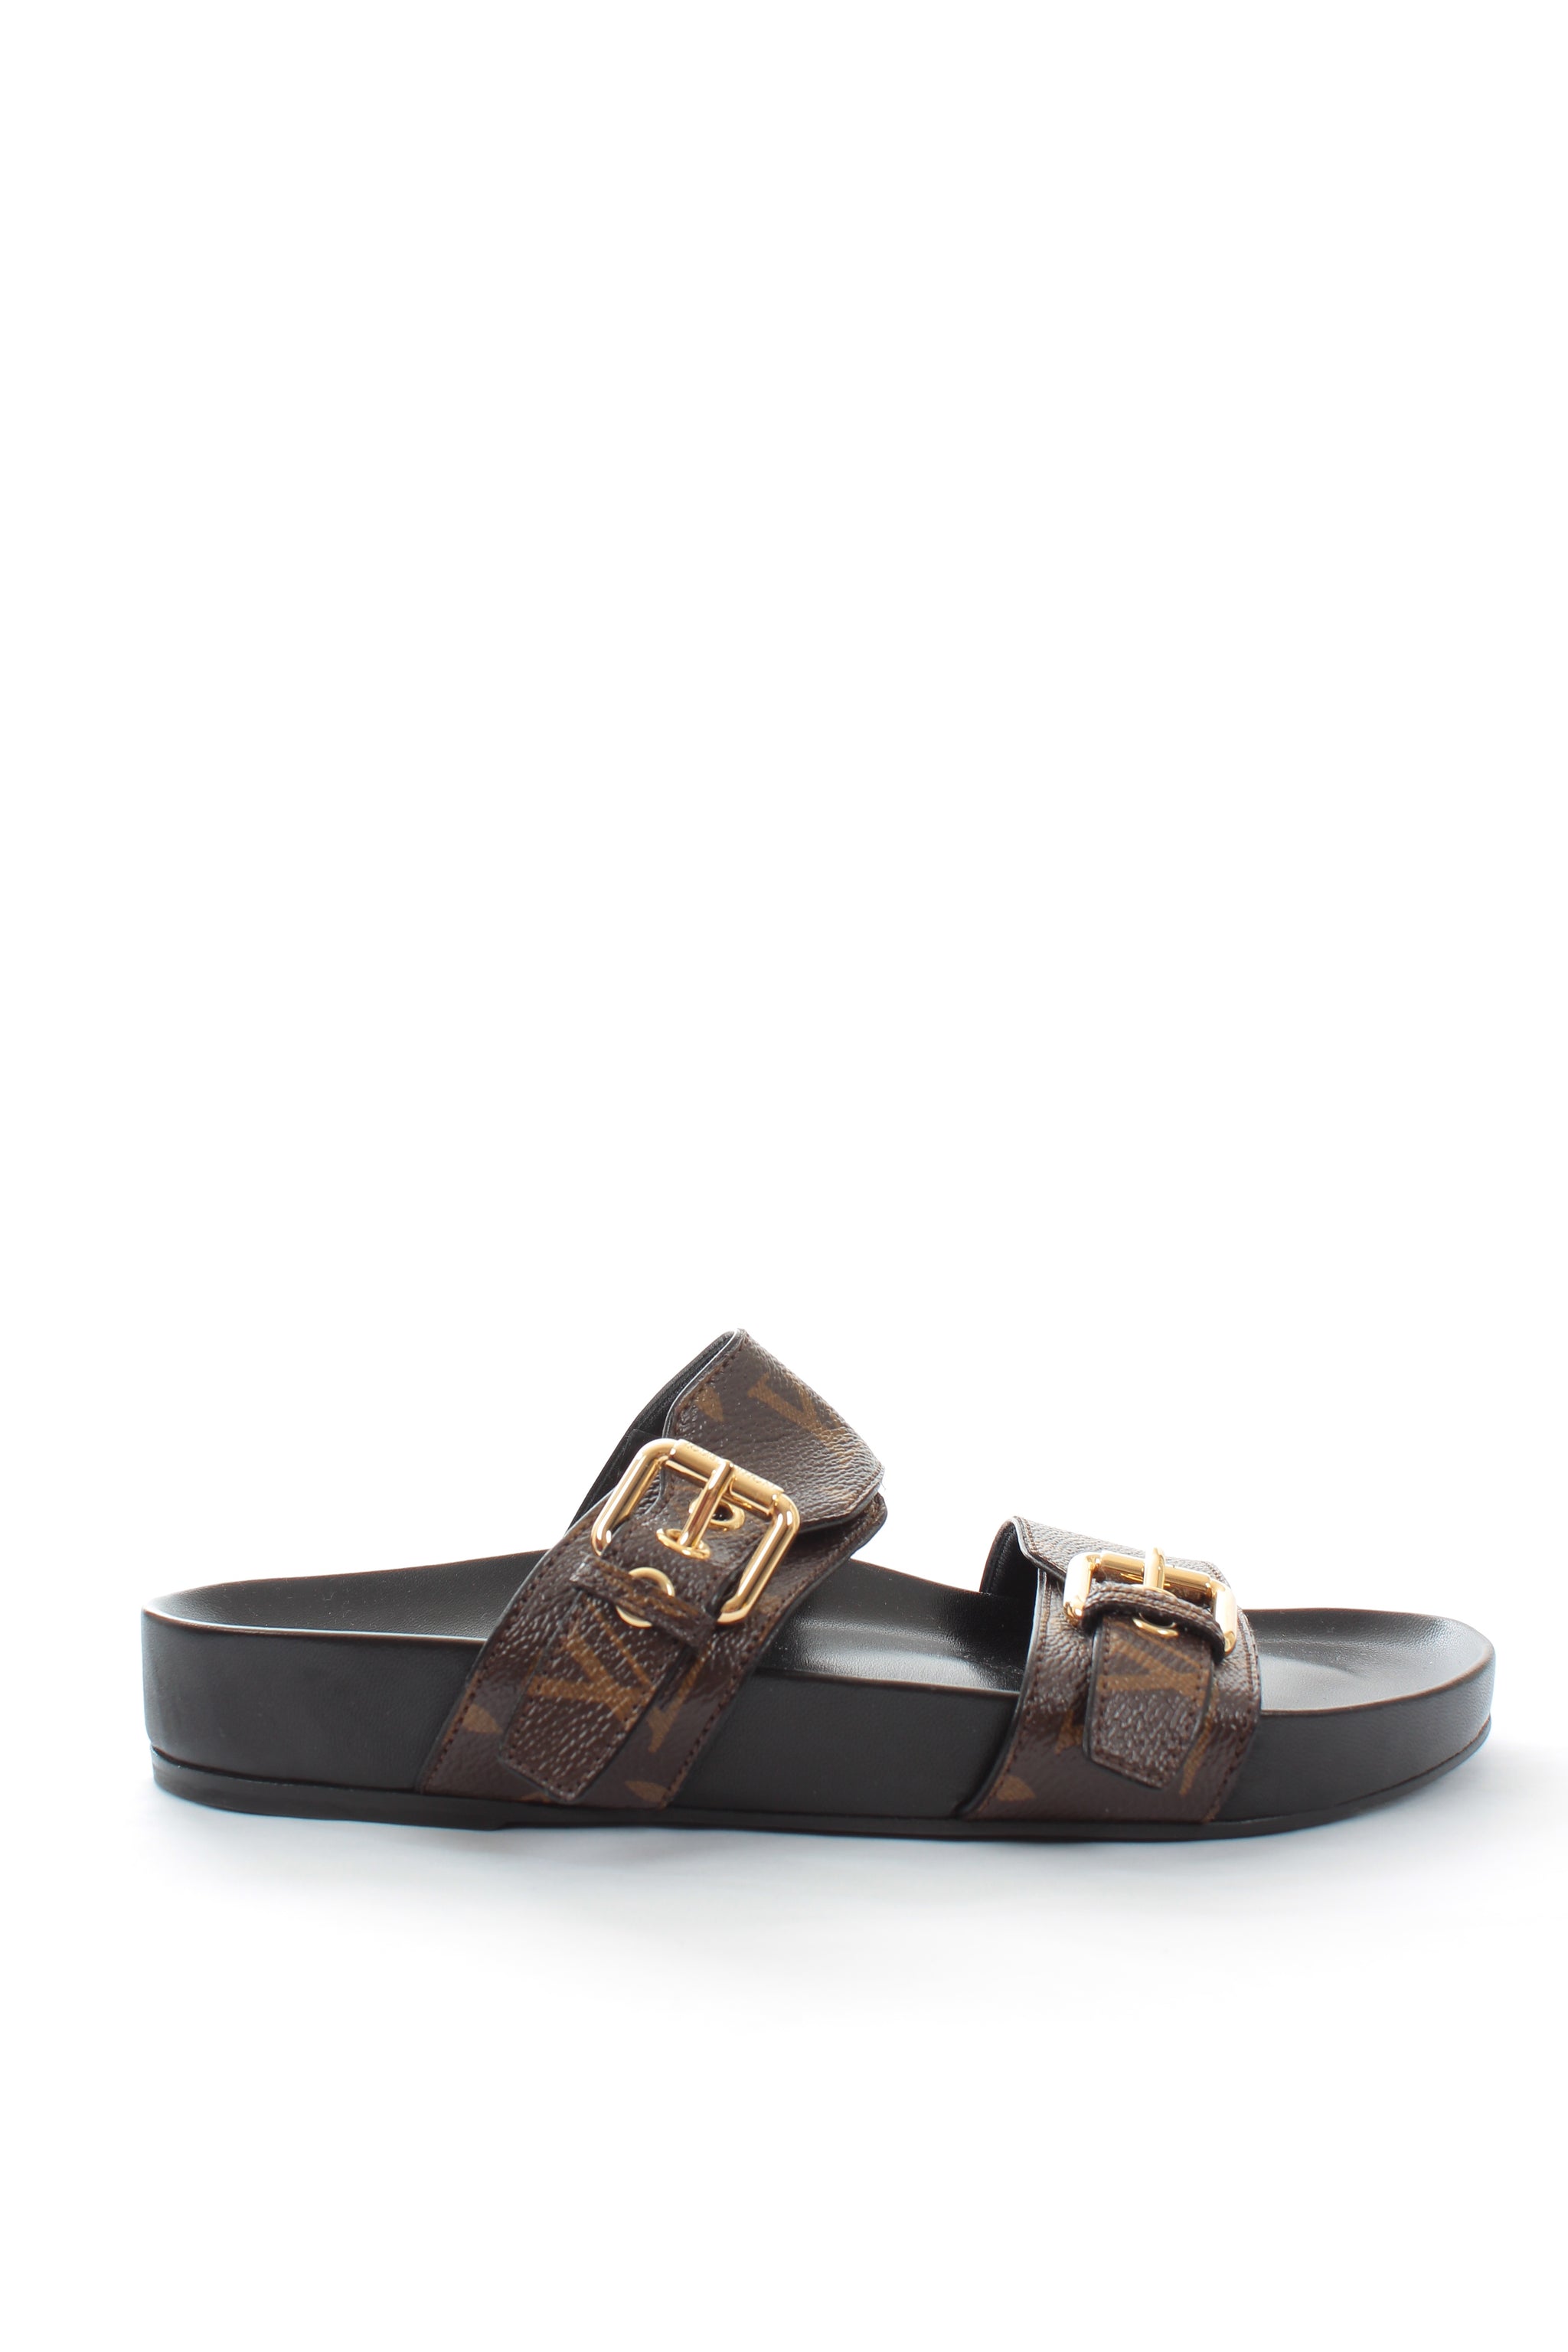 Louis Vuitton Bom Dia Mule Sandals - Current Season - Closet Upgrade